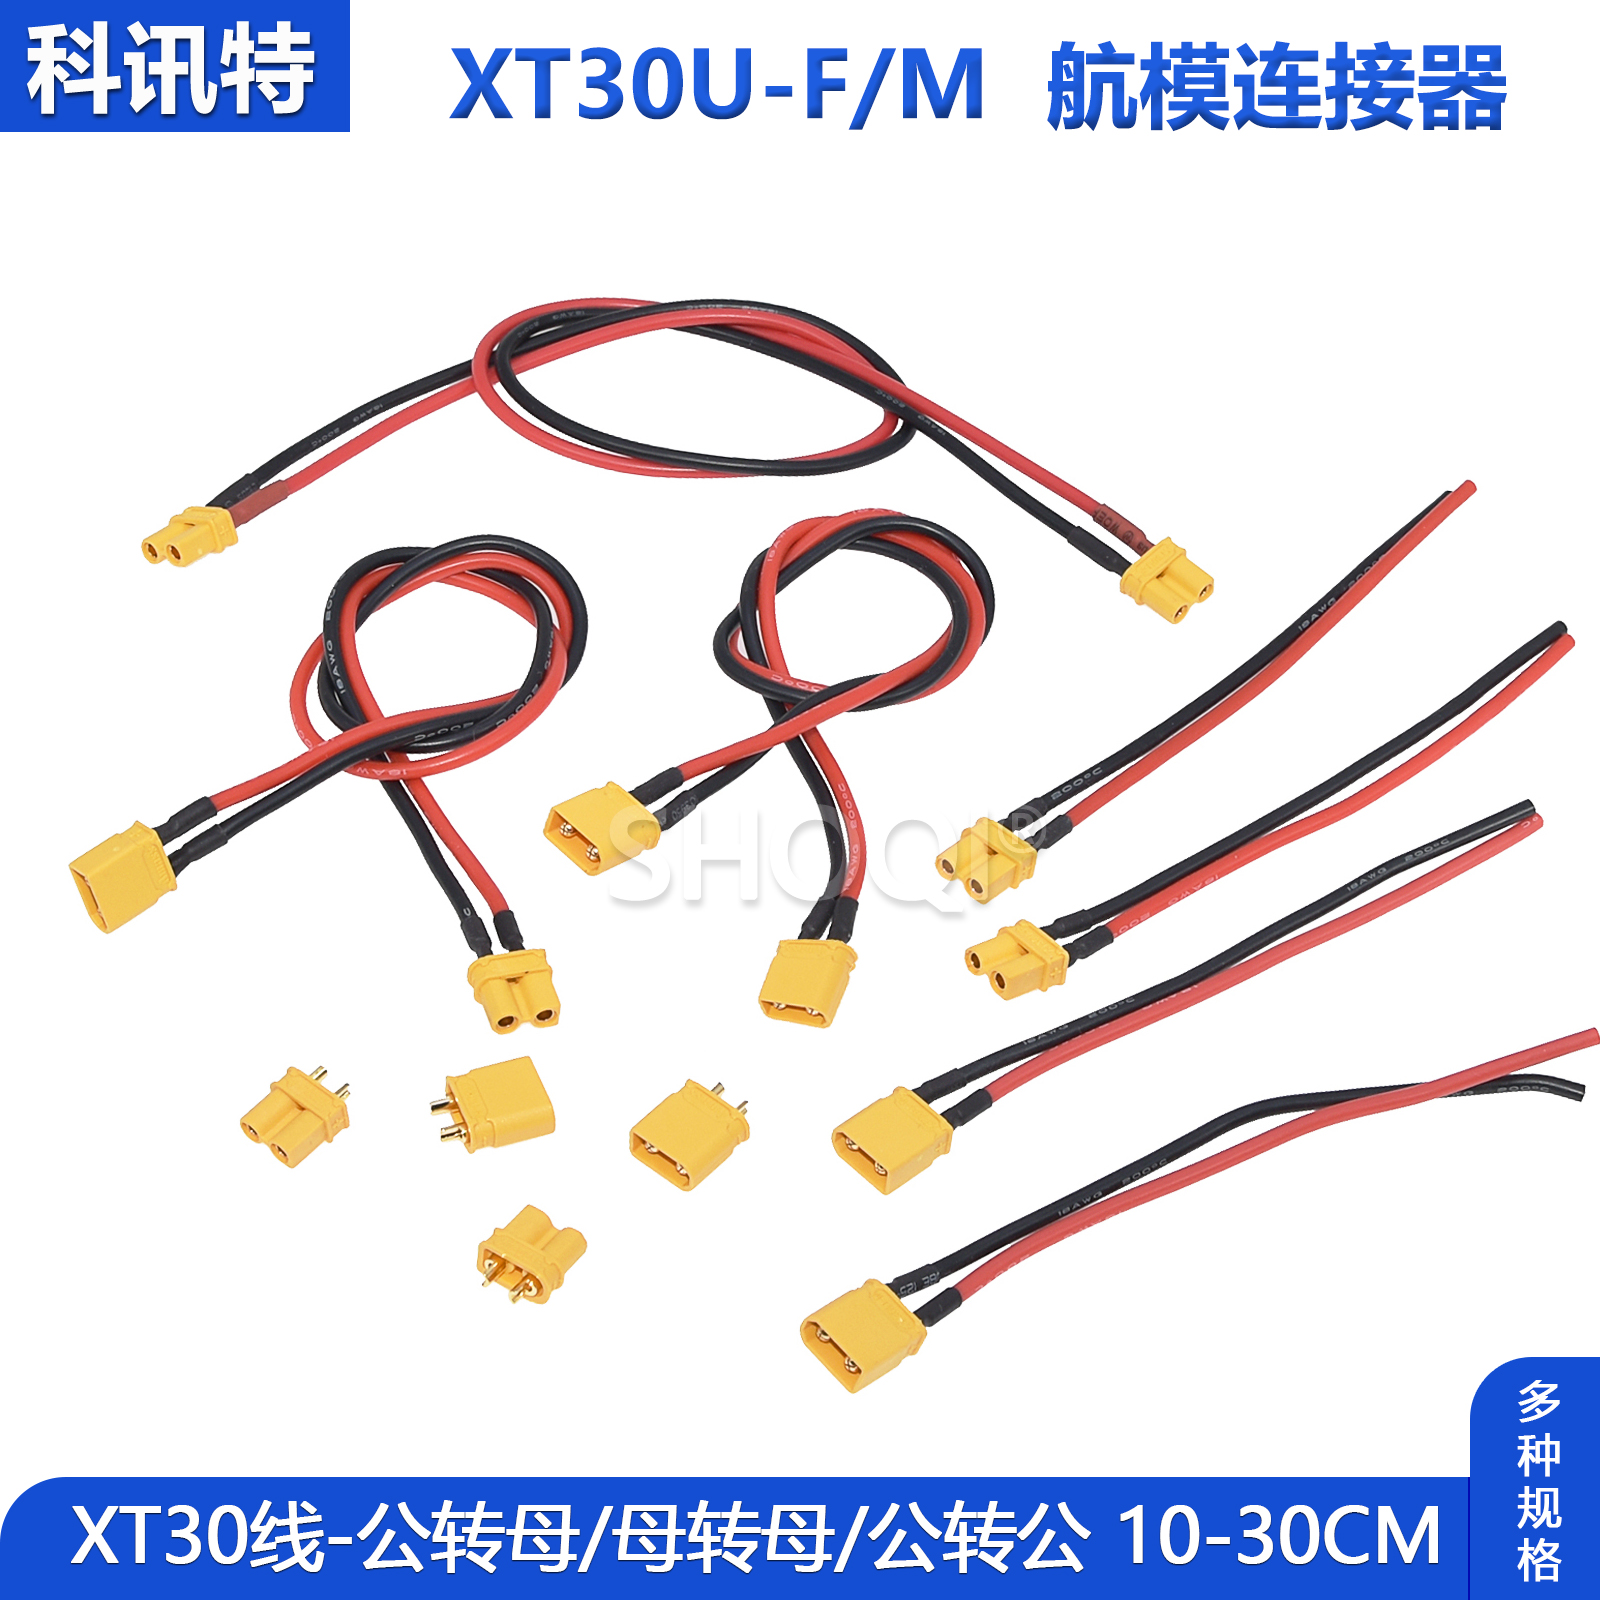 XT30U-F/M 锂电池插头连接器航模电机插座电瓶车公母头镀金对插口